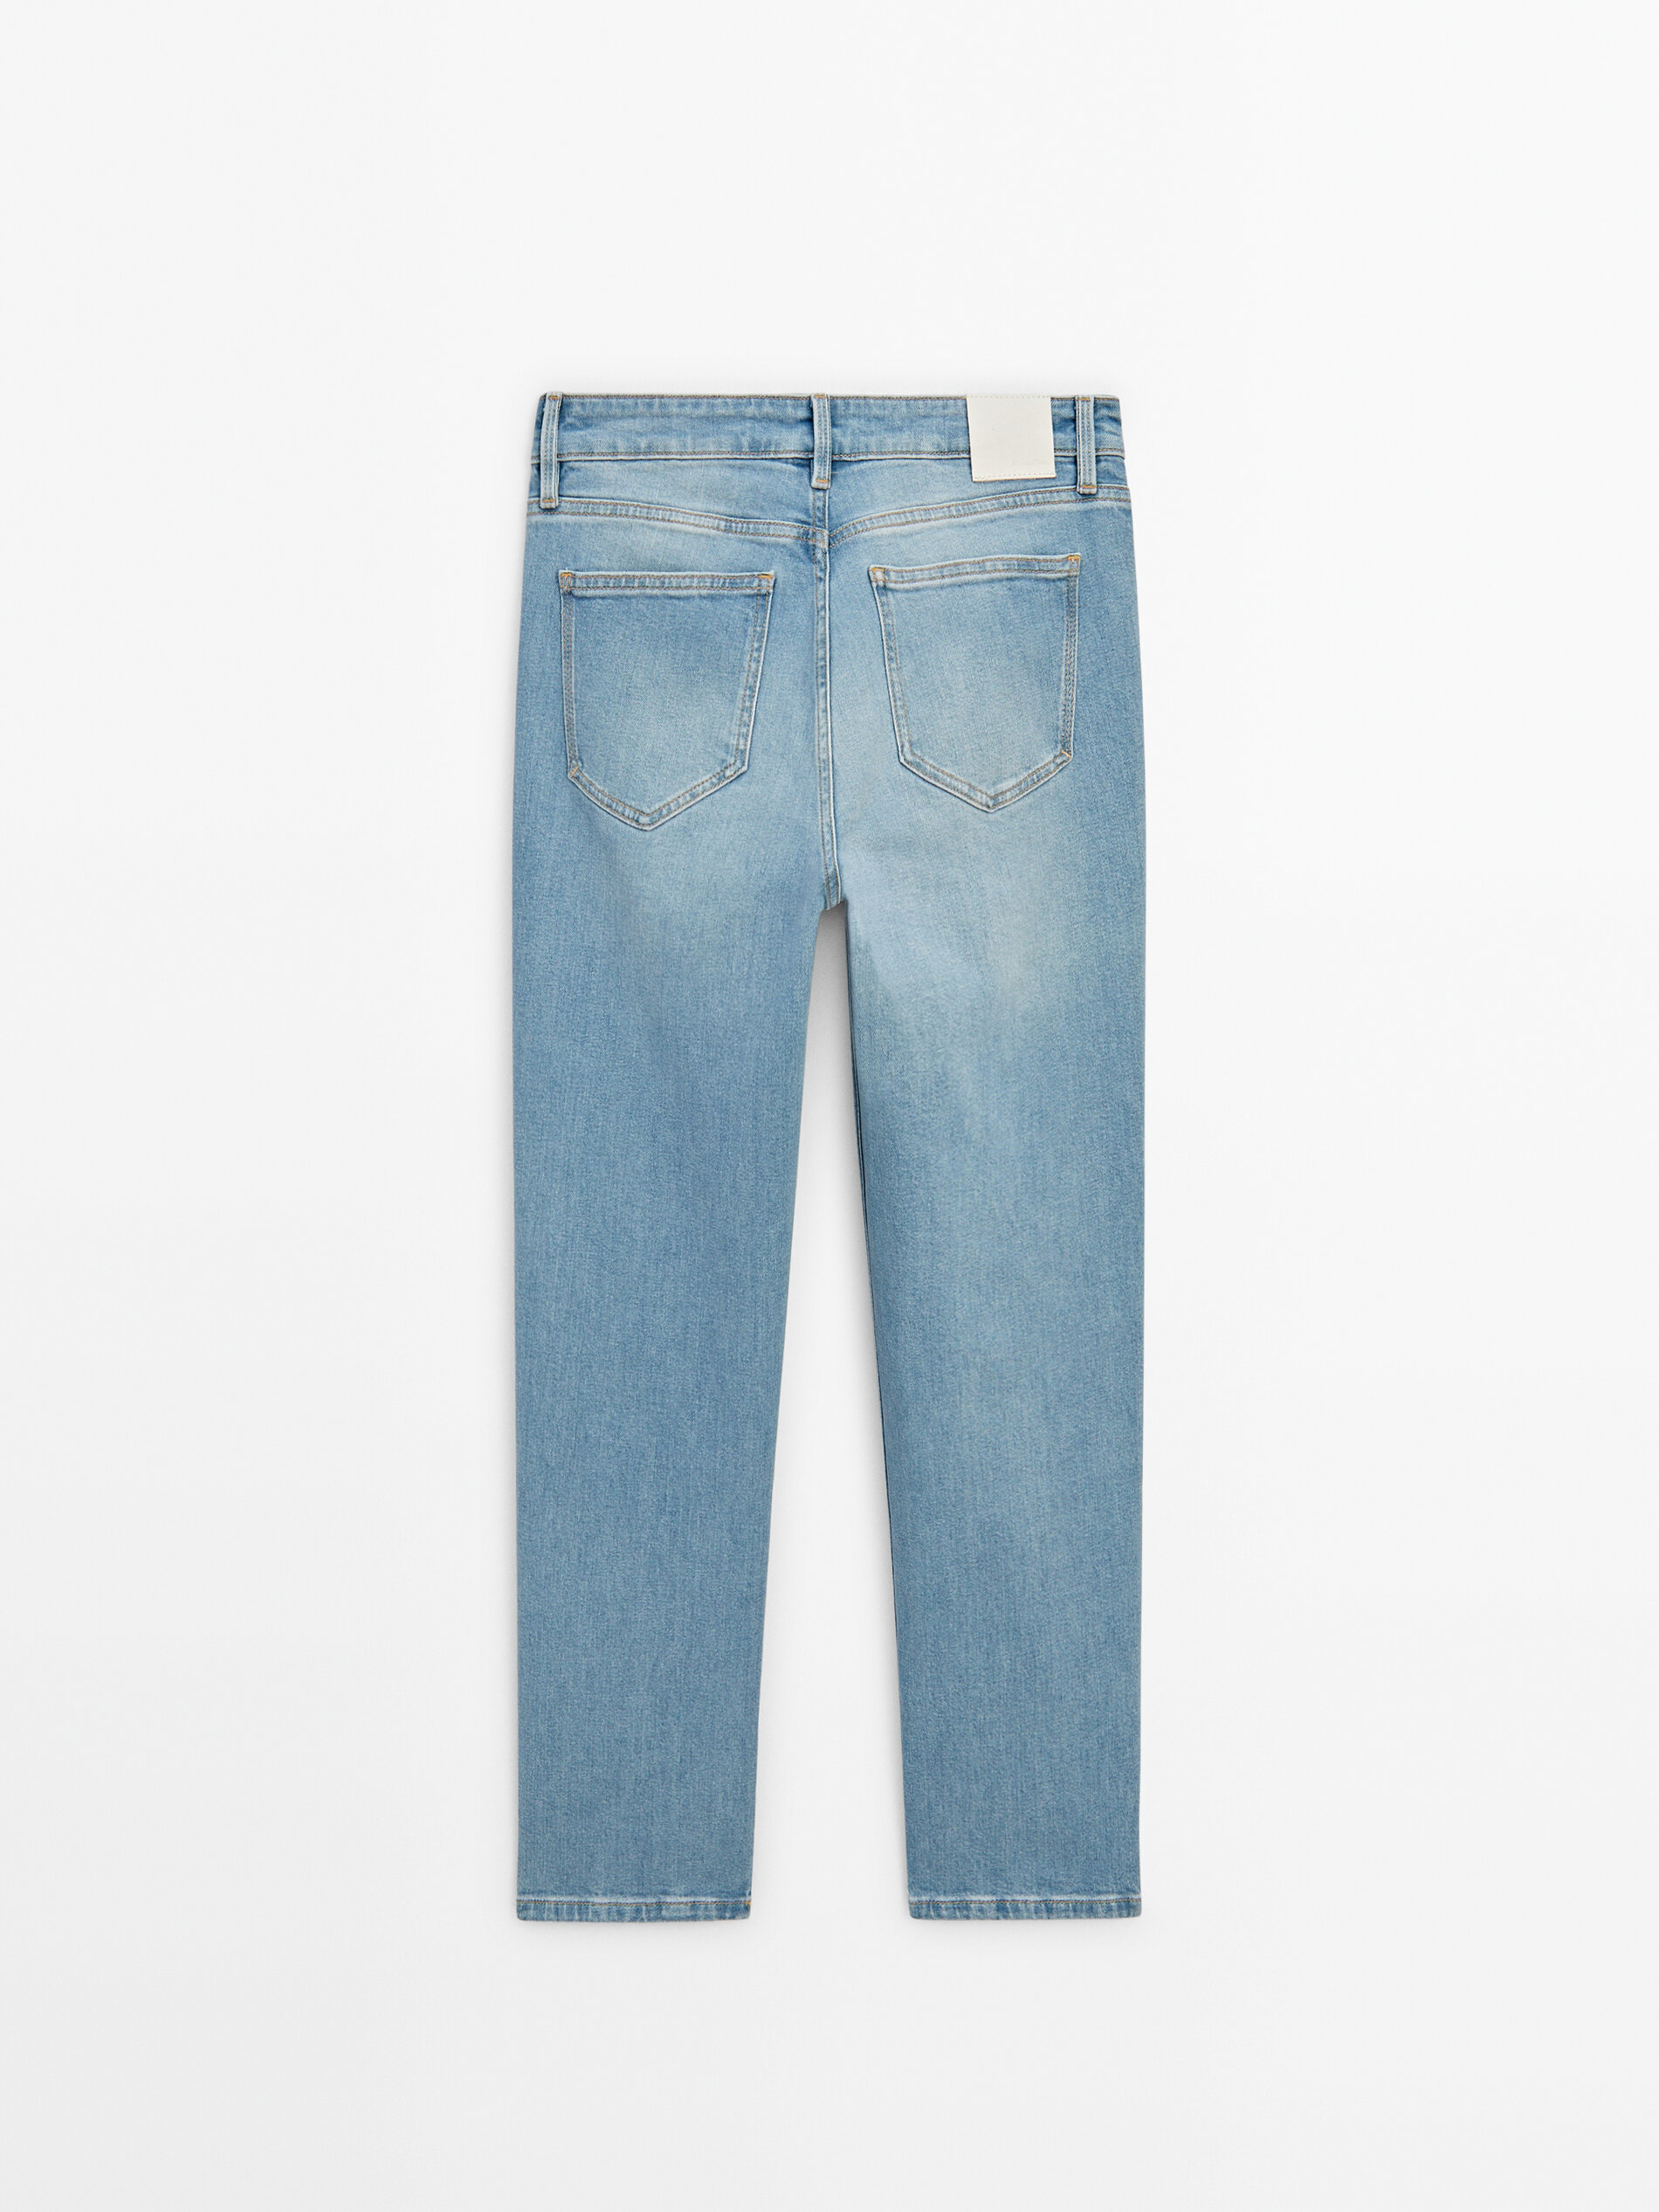 Jeans tiro medio slim cropped bleach